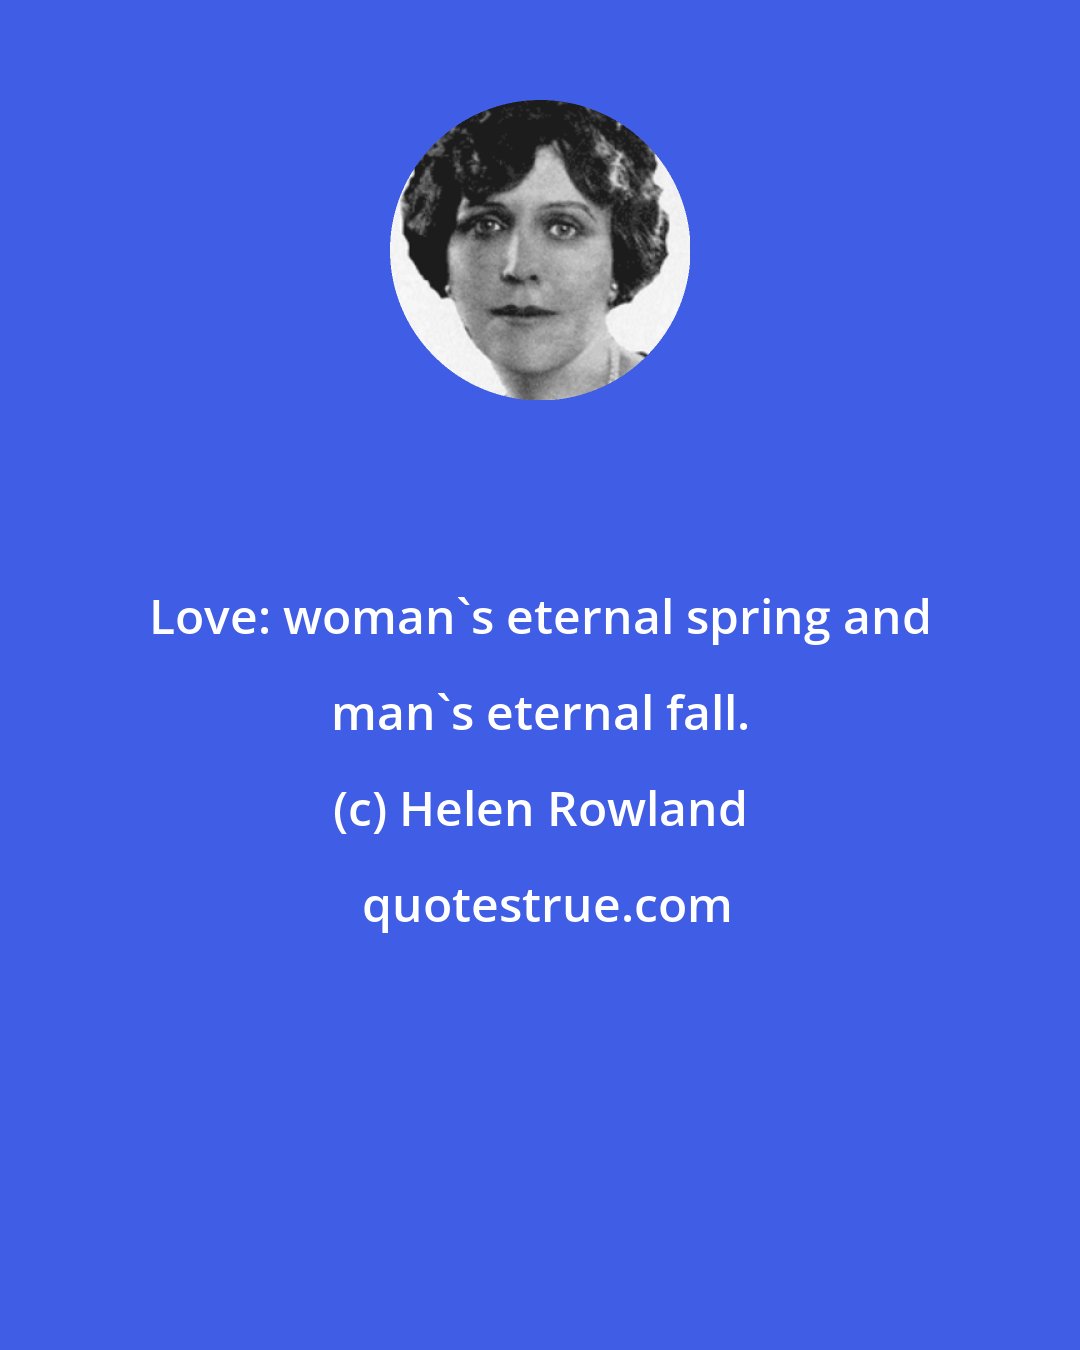 Helen Rowland: Love: woman's eternal spring and man's eternal fall.